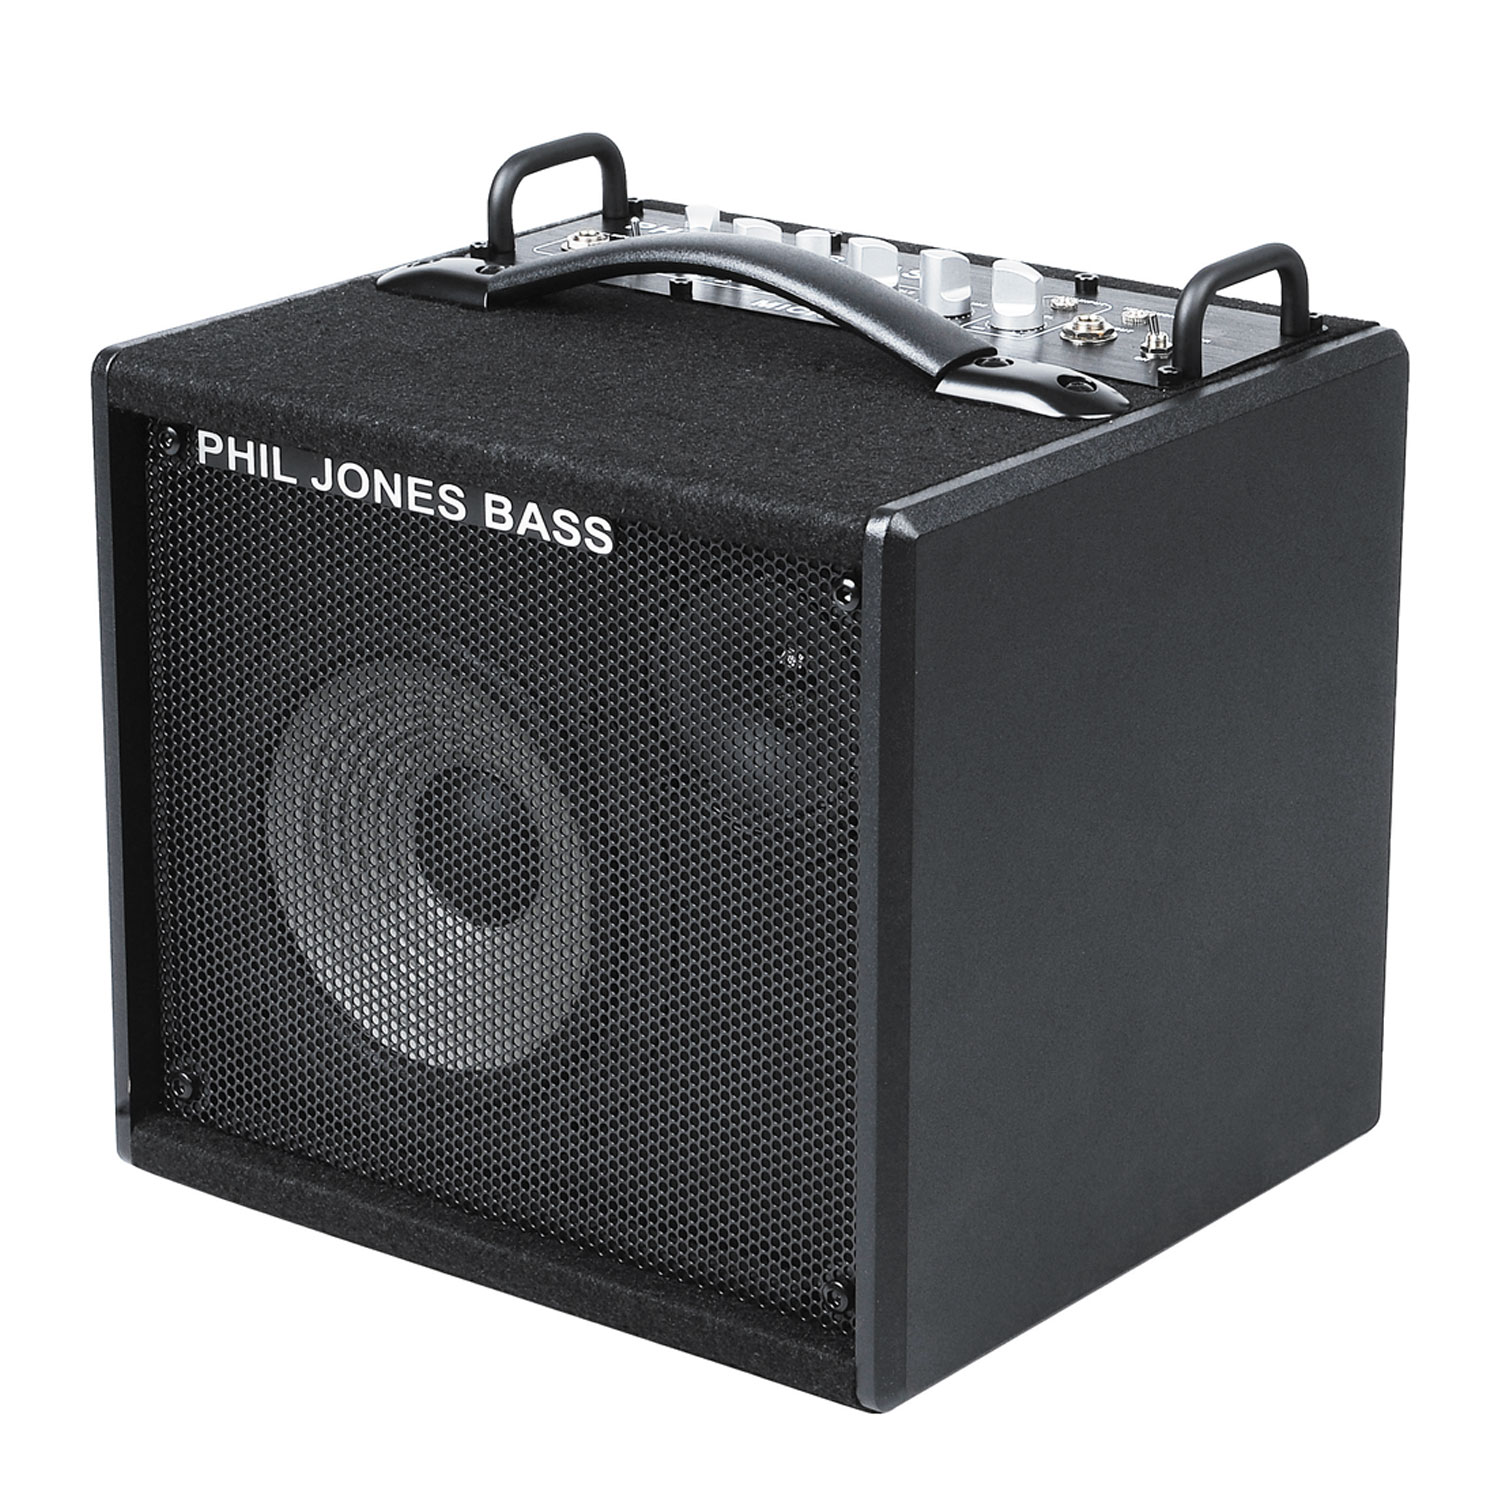 Bass Cub Pro | PHIL JONES BASS